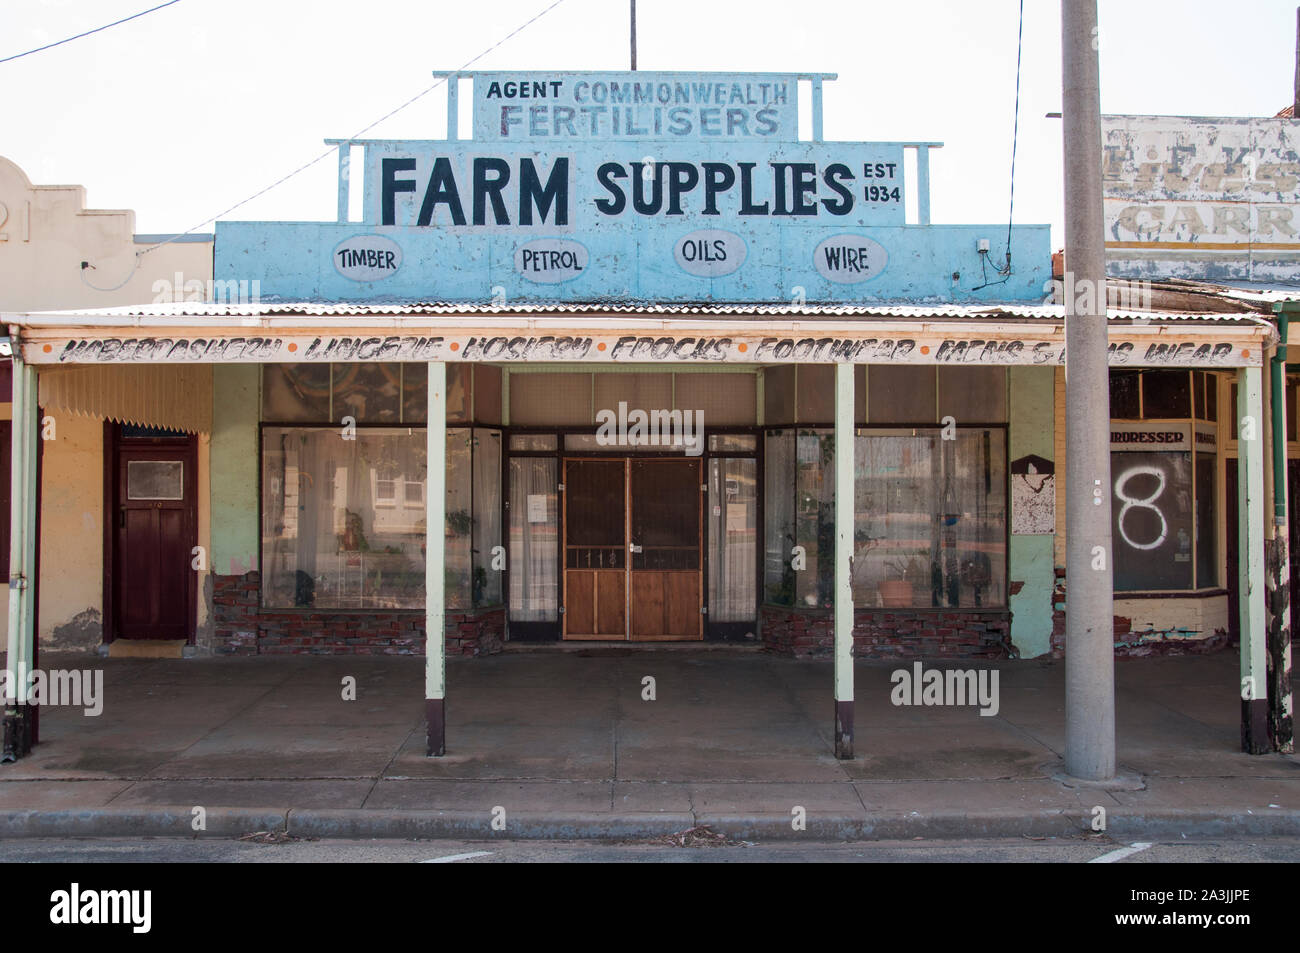 Disused shopfronts in the main street of a small farming town, NW Victoria, Australia Stock Photo